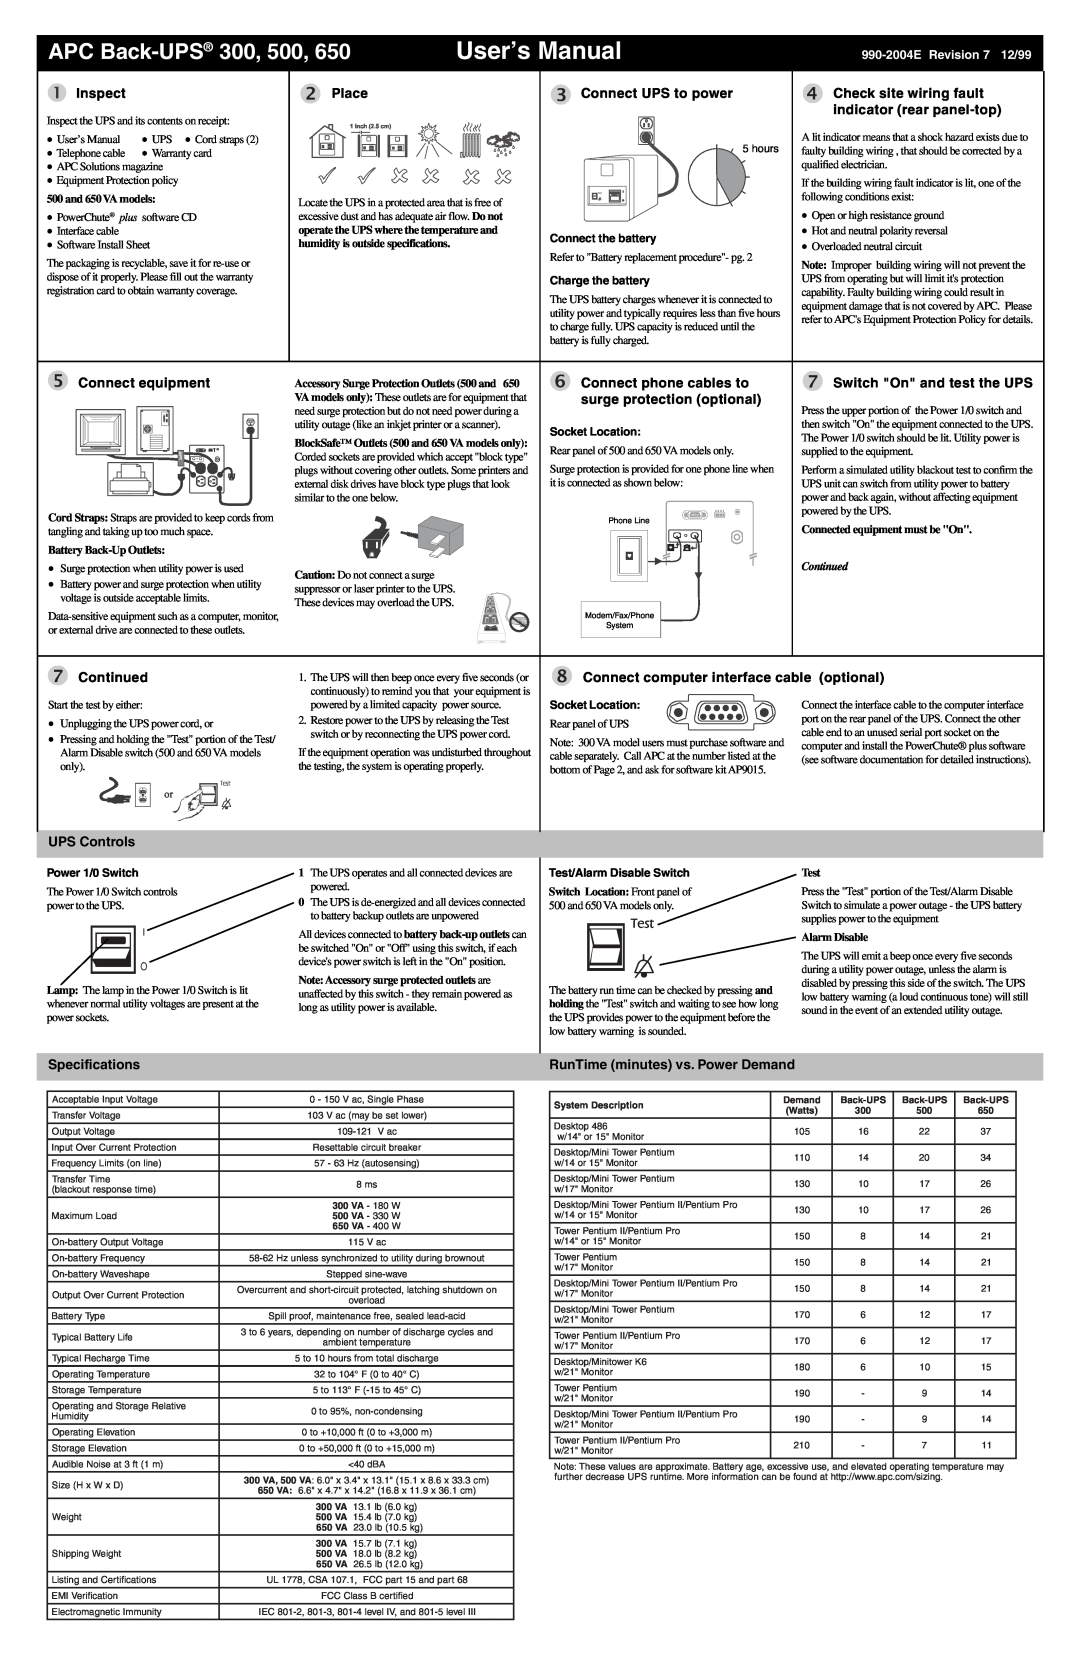 APC specifications User’s Manual, APC Back-UPS 300, 500 